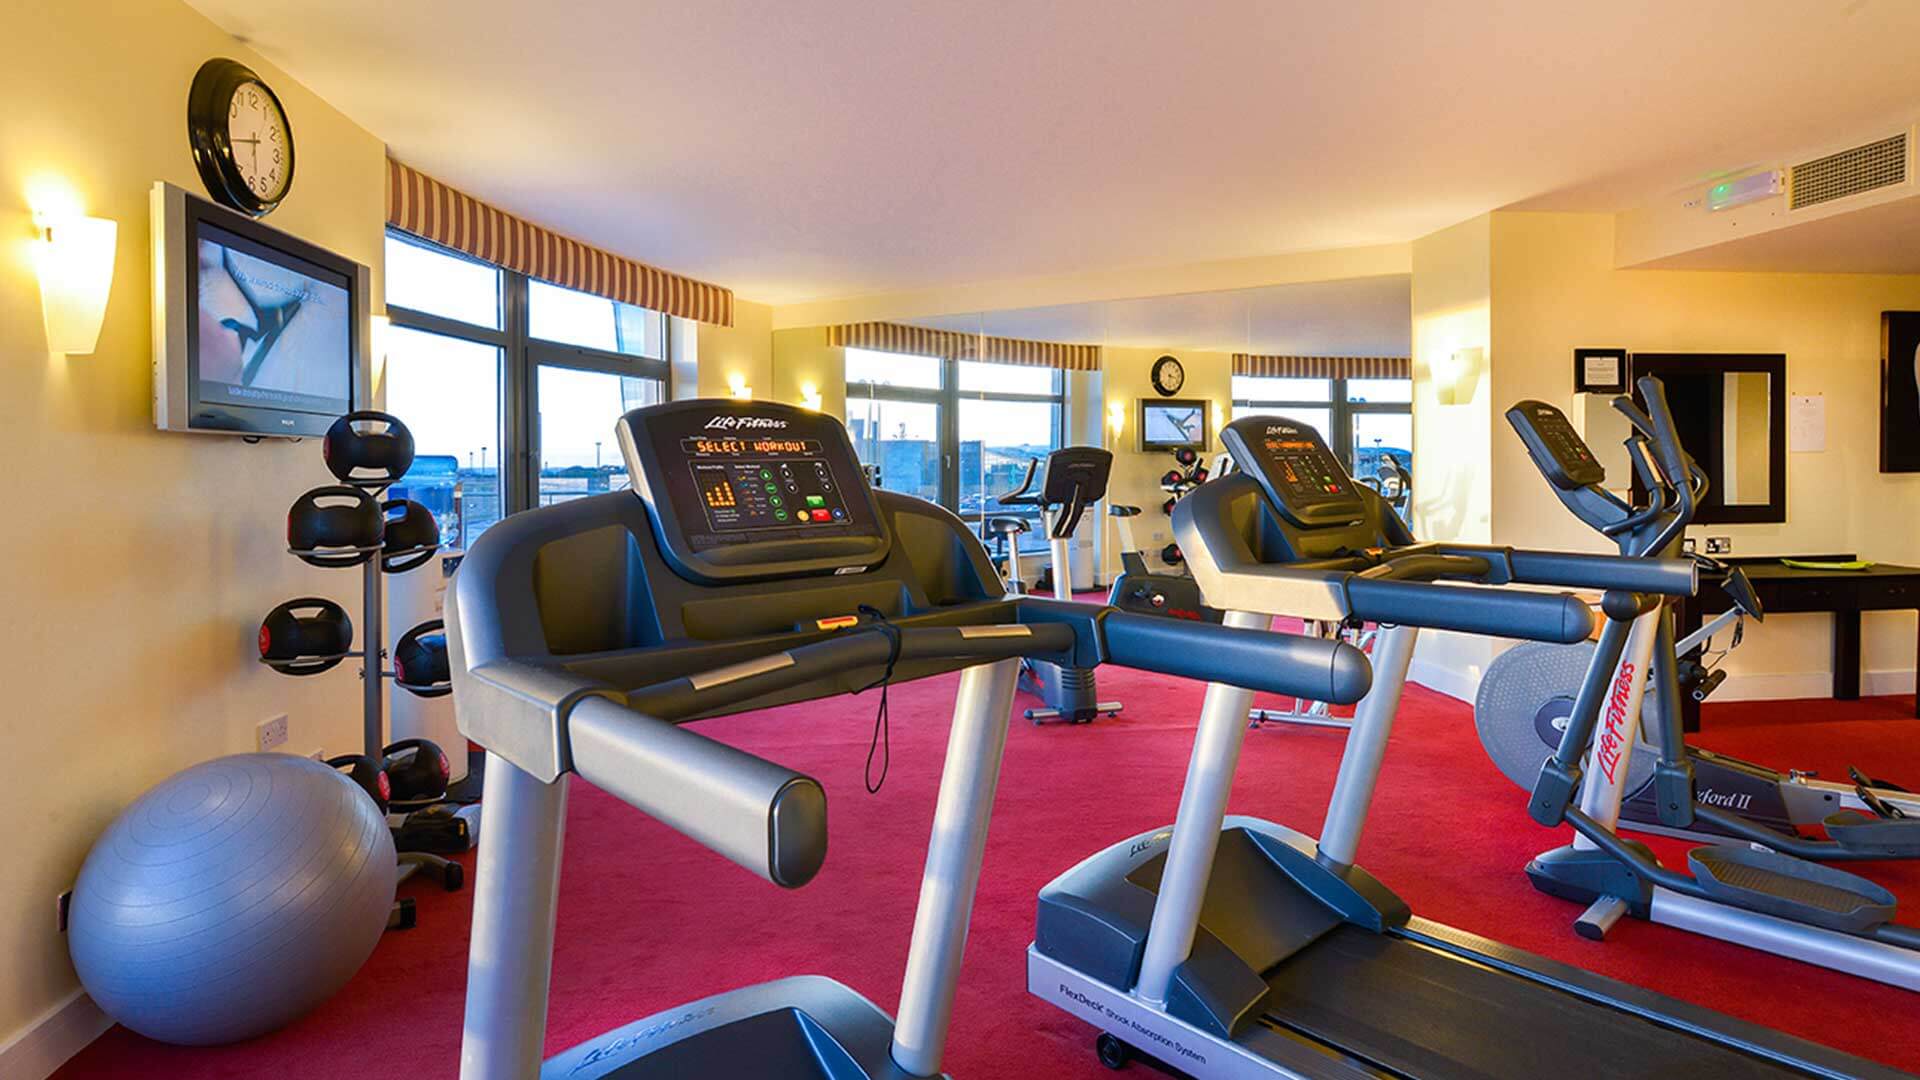 Gym equipment in the Cork International Hotel